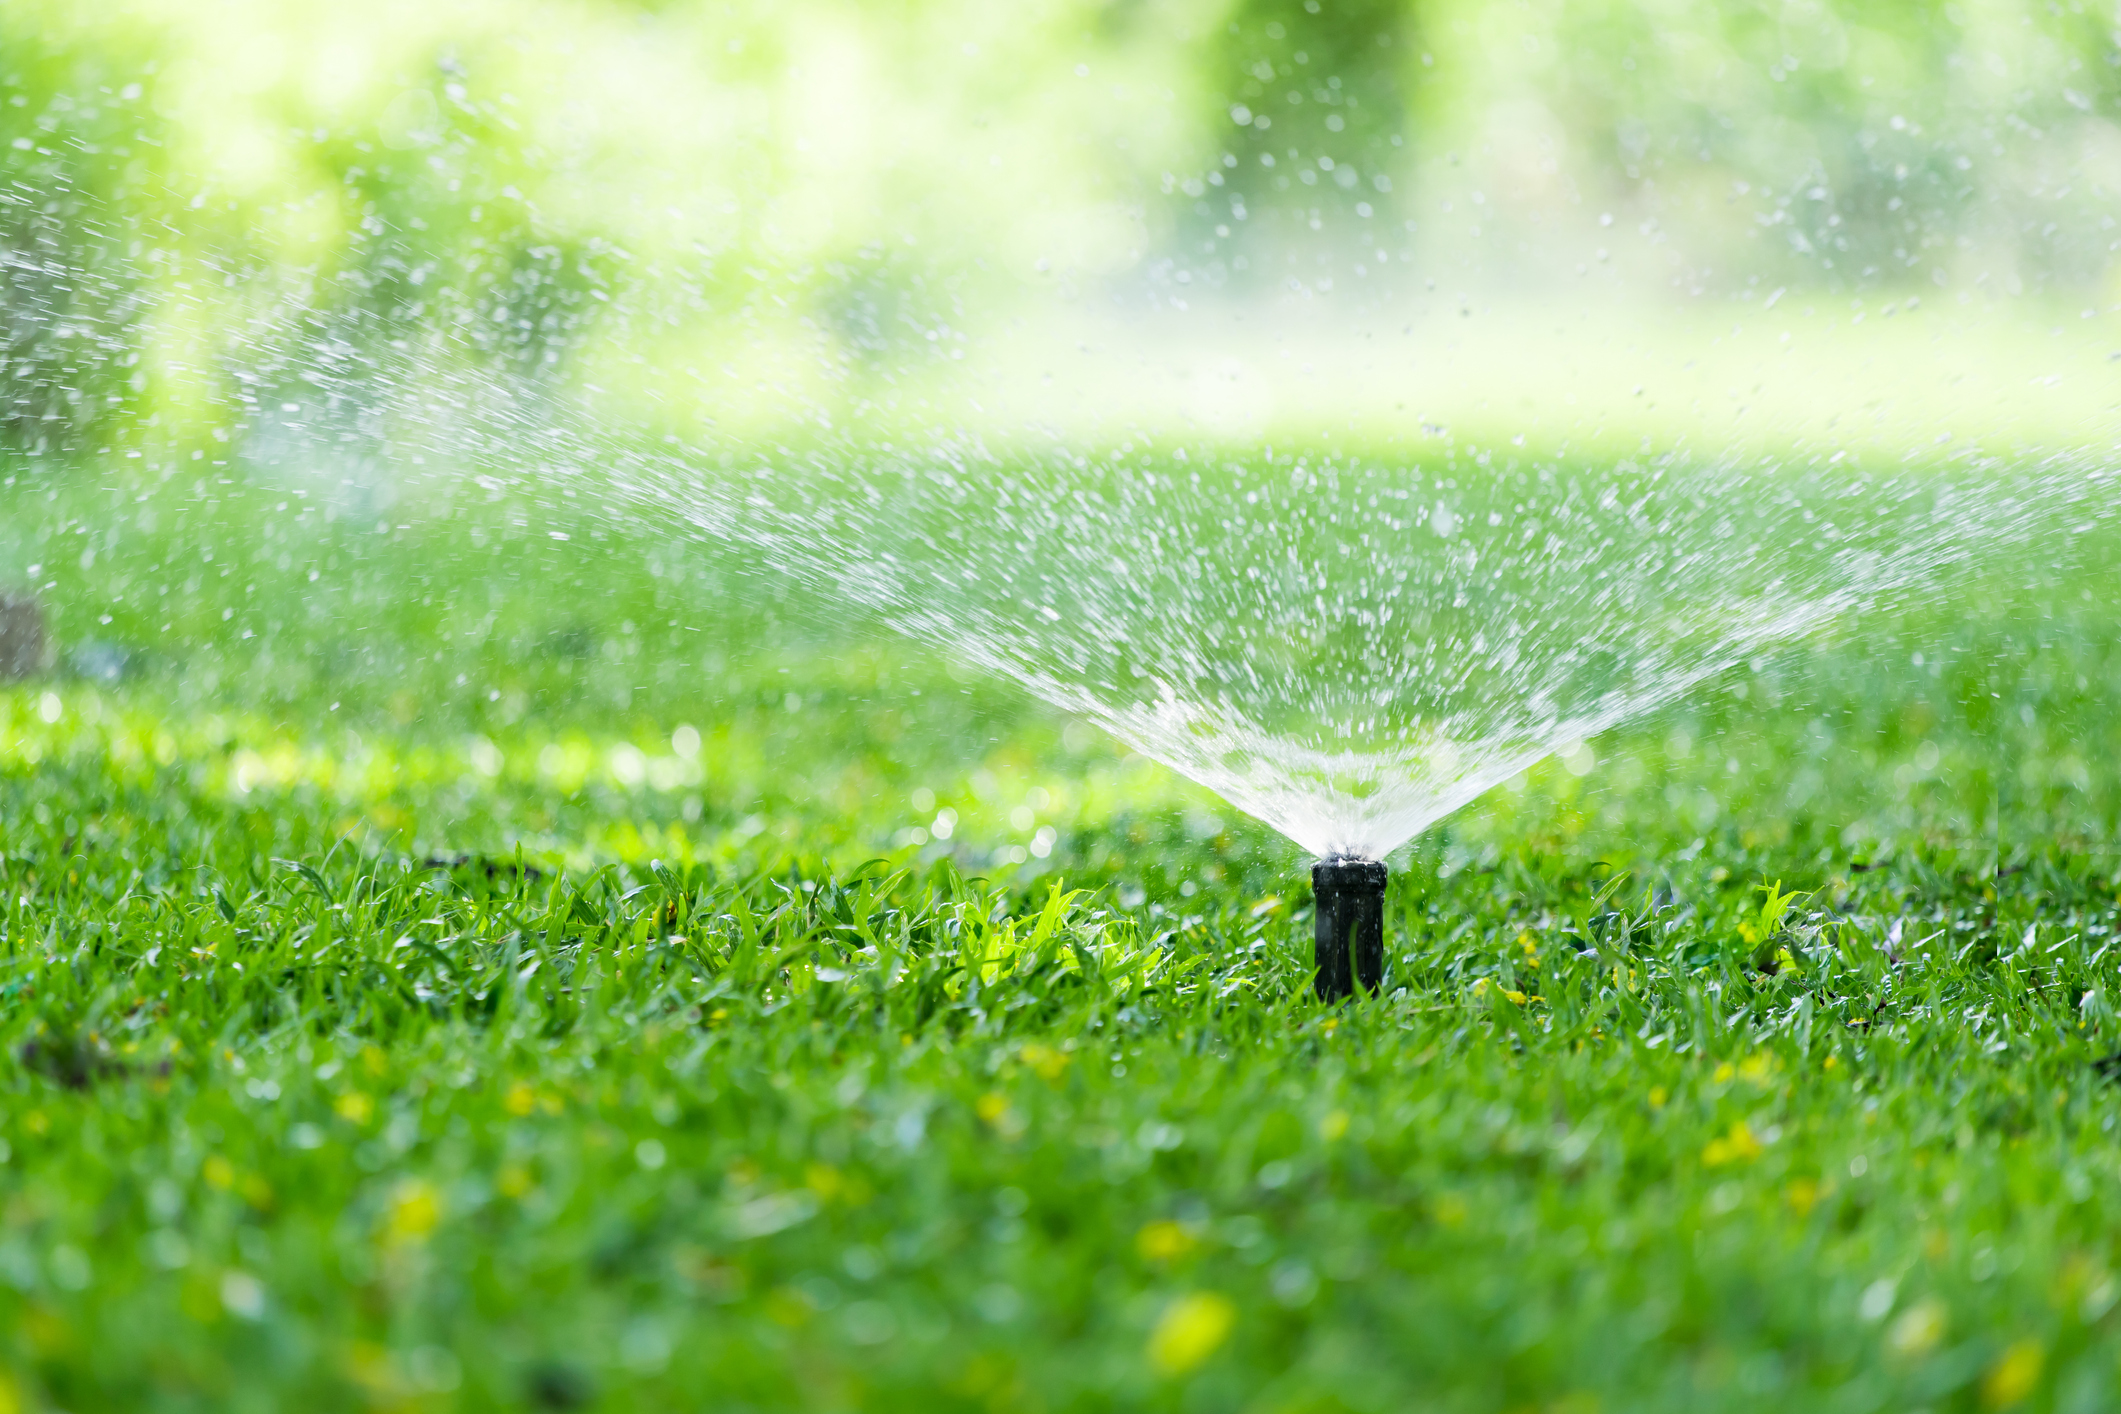 Sustainable Irrigation is Smart Irrigation